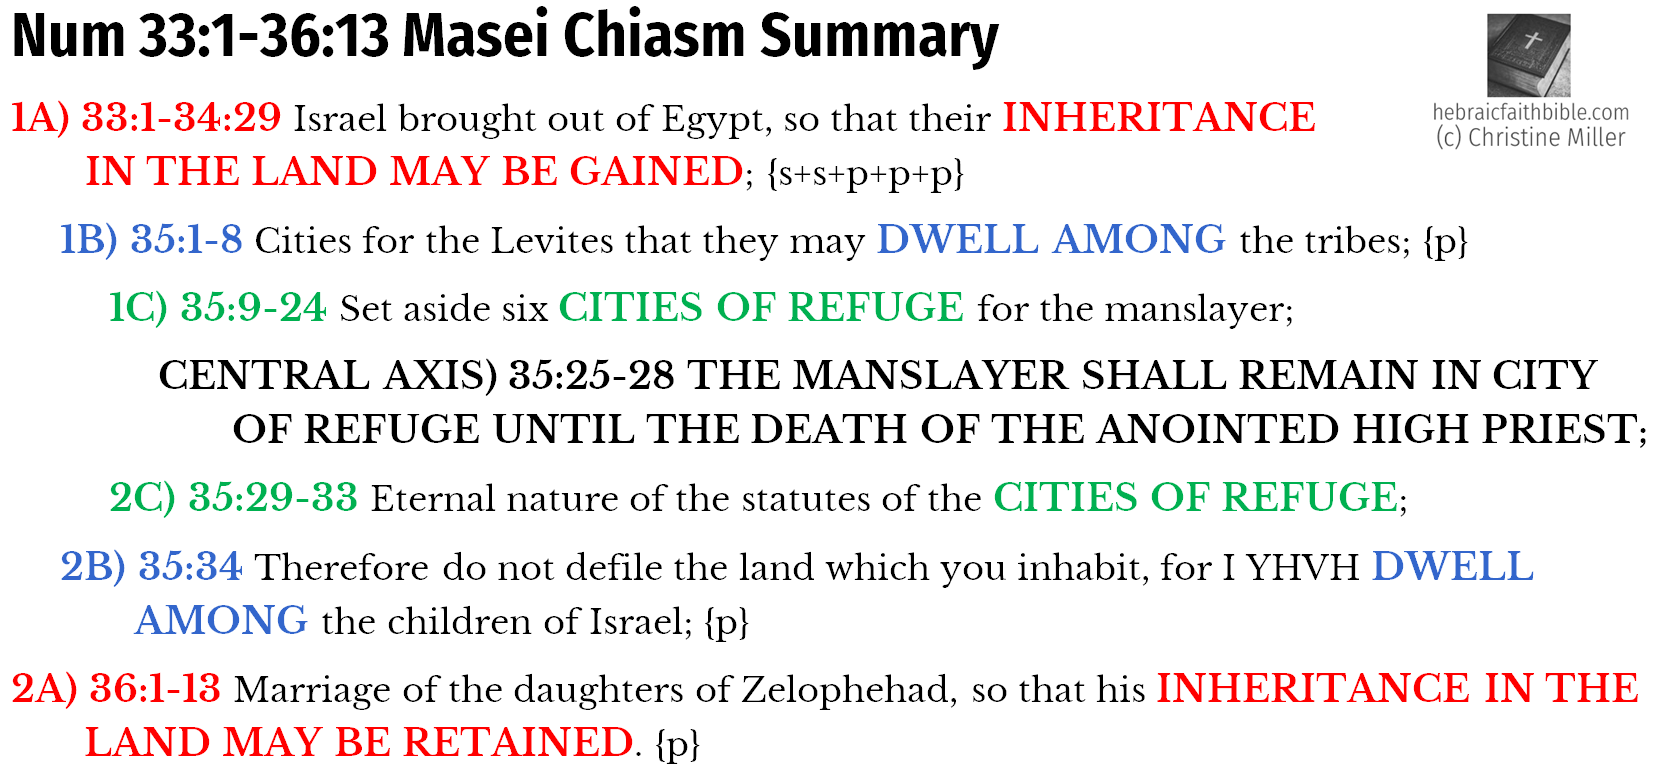 Num 33:1-36:13 Masei Chiasm Summary | hebraicfaithbible.com